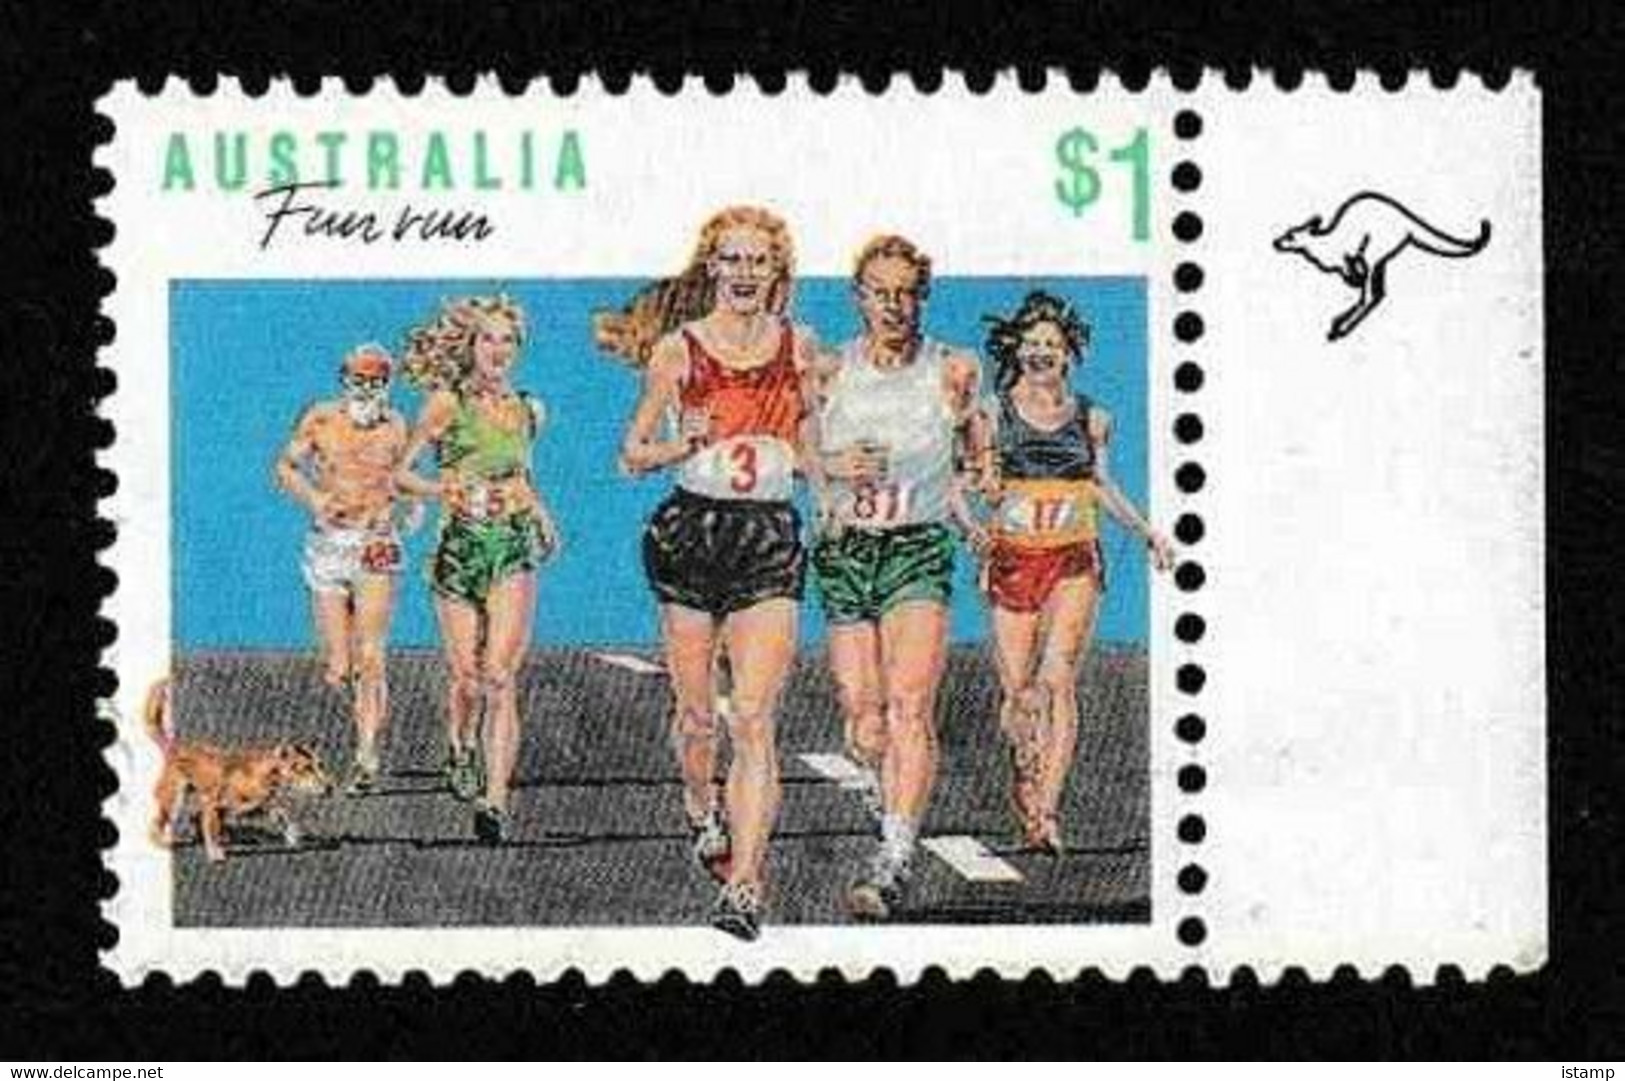 ⭕1990 - Australia SPORTS Series FUN RUNS (5th Reprint - Kangaroo) - $1 Stamp MNH⭕ - Proofs & Reprints